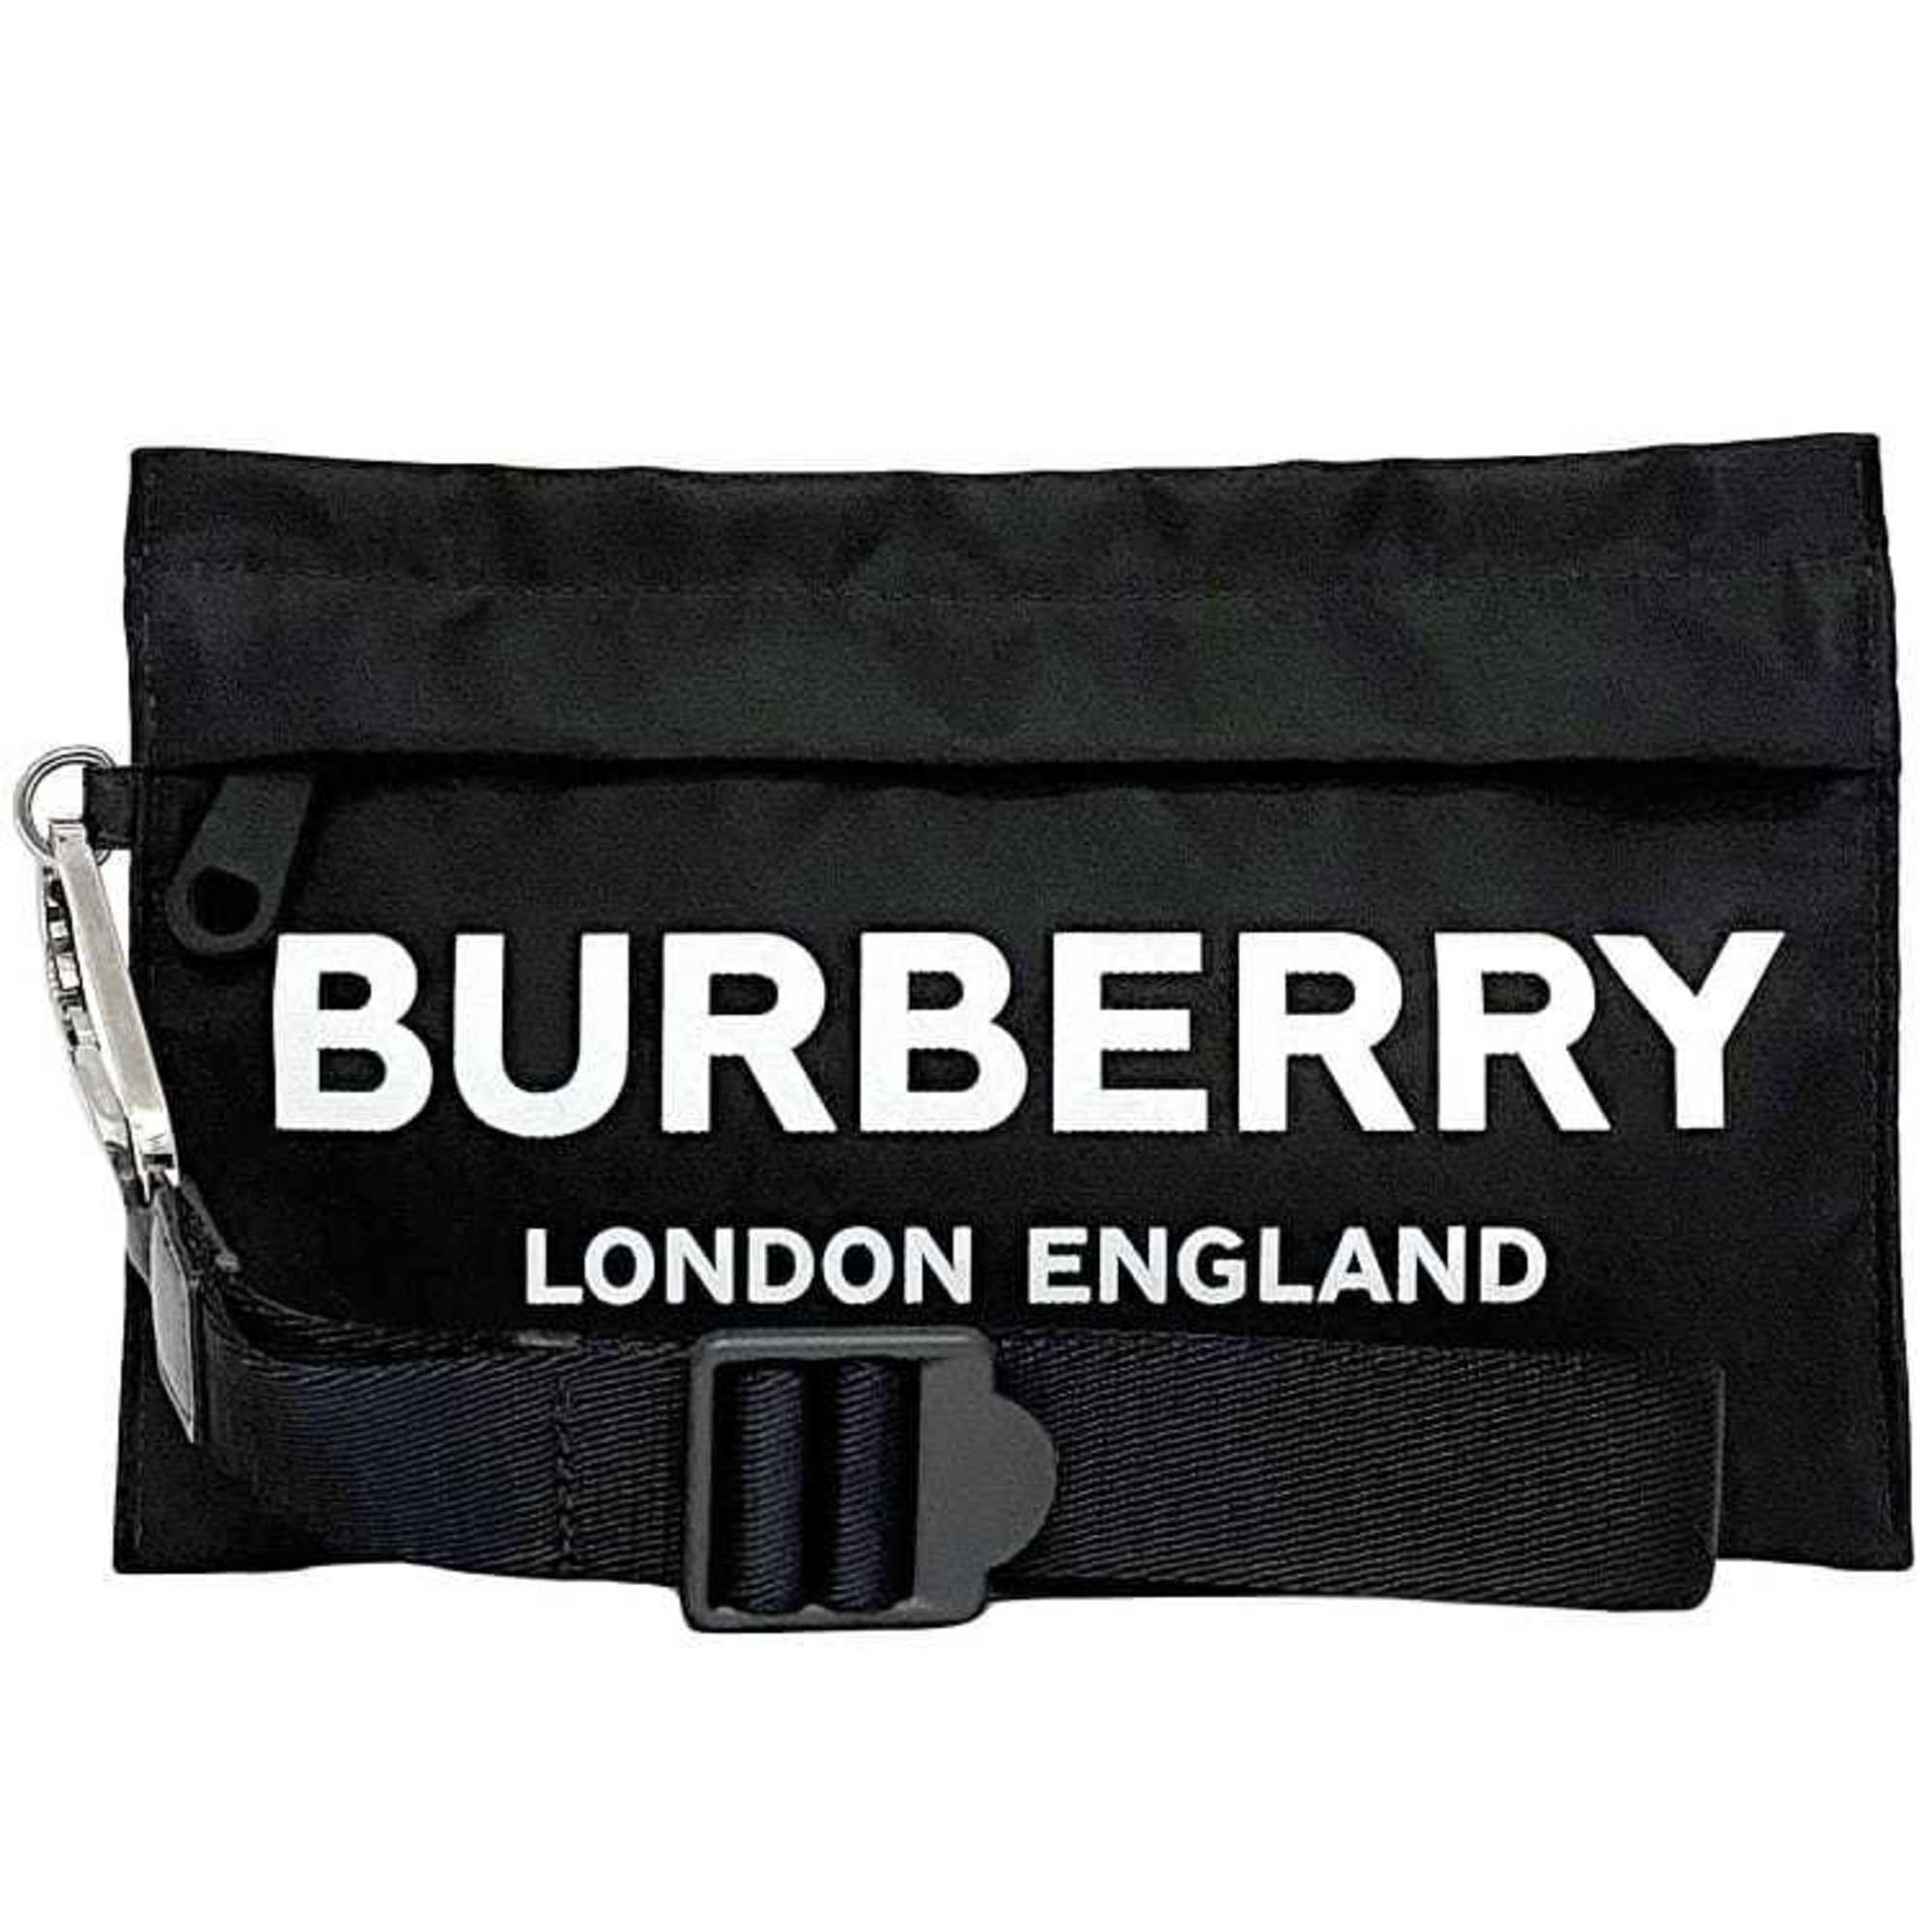 Burberry Pouch Black London ec-20580 Clutch Bag Nylon Canvas BURBERRY Carabiner Compact